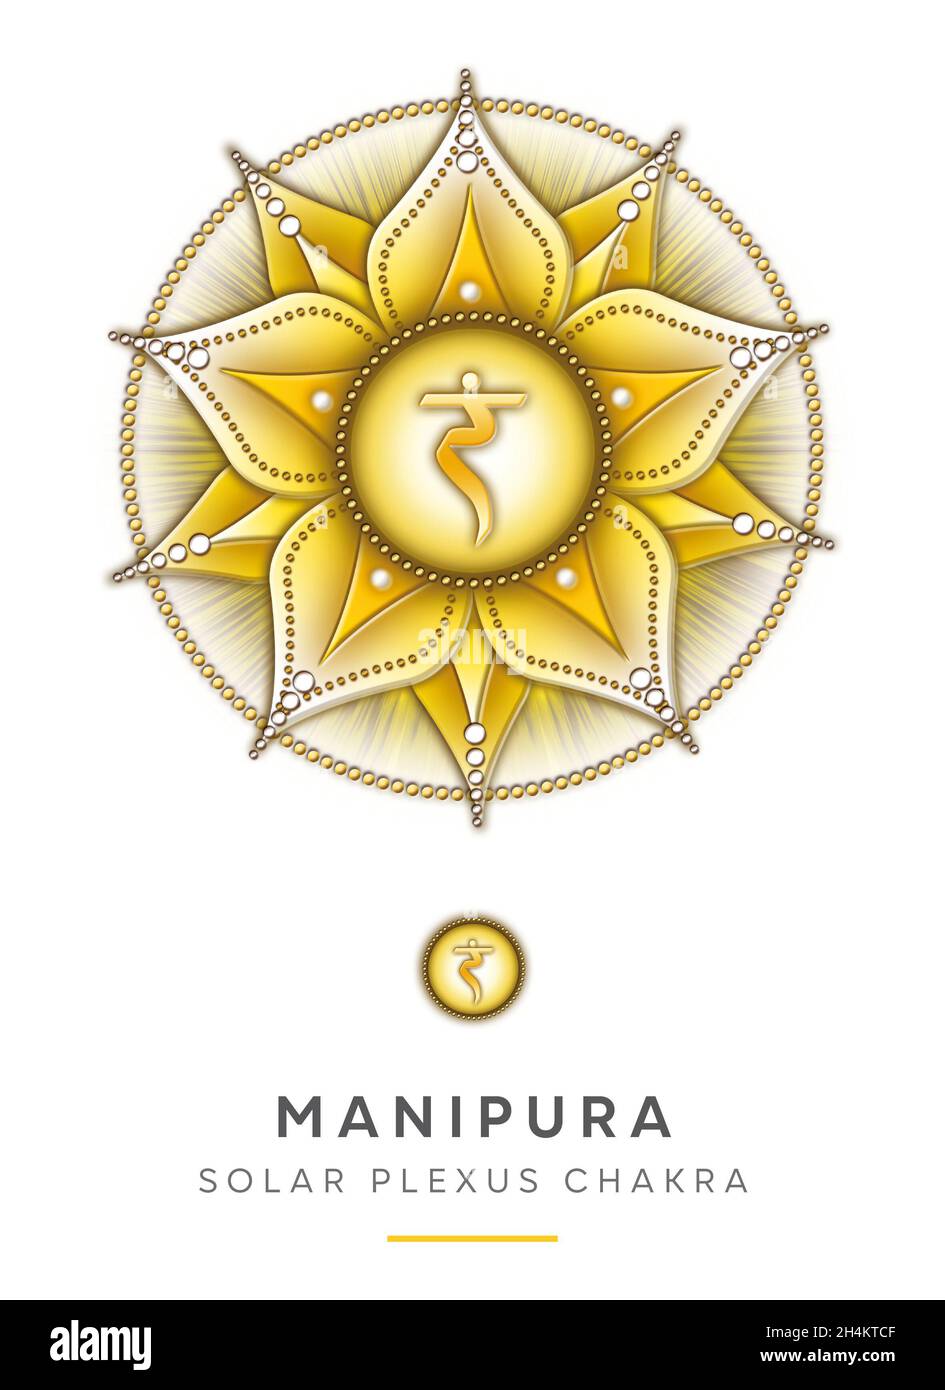 Chakra Symbols, Solar Plexus Chakra - MANIPURA - Strength